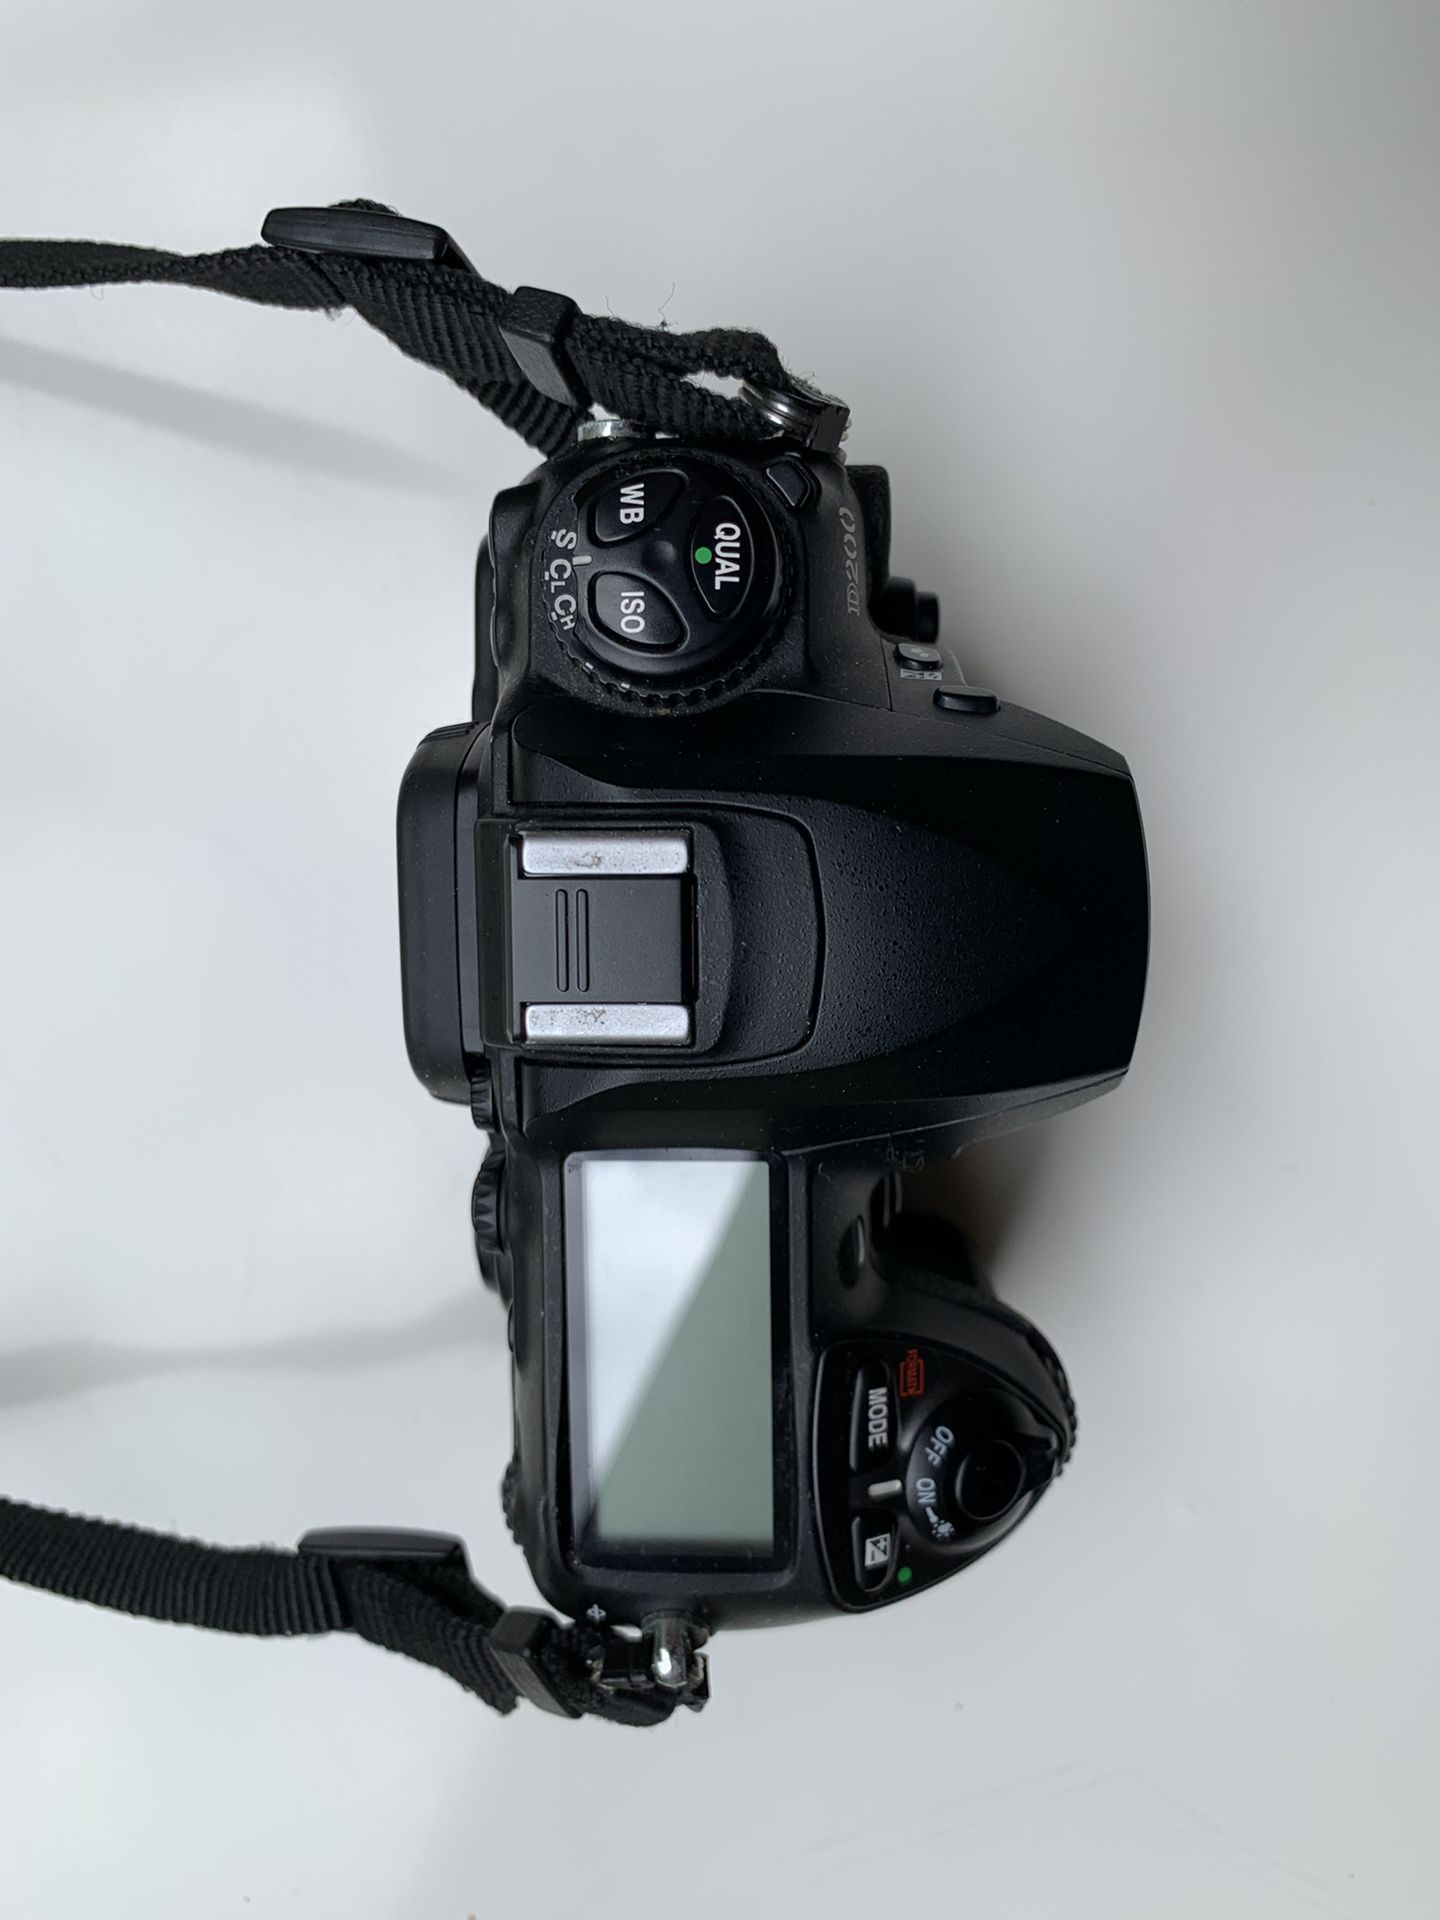 Nikon D D200 10.2MP Digital SLR Camera - Black